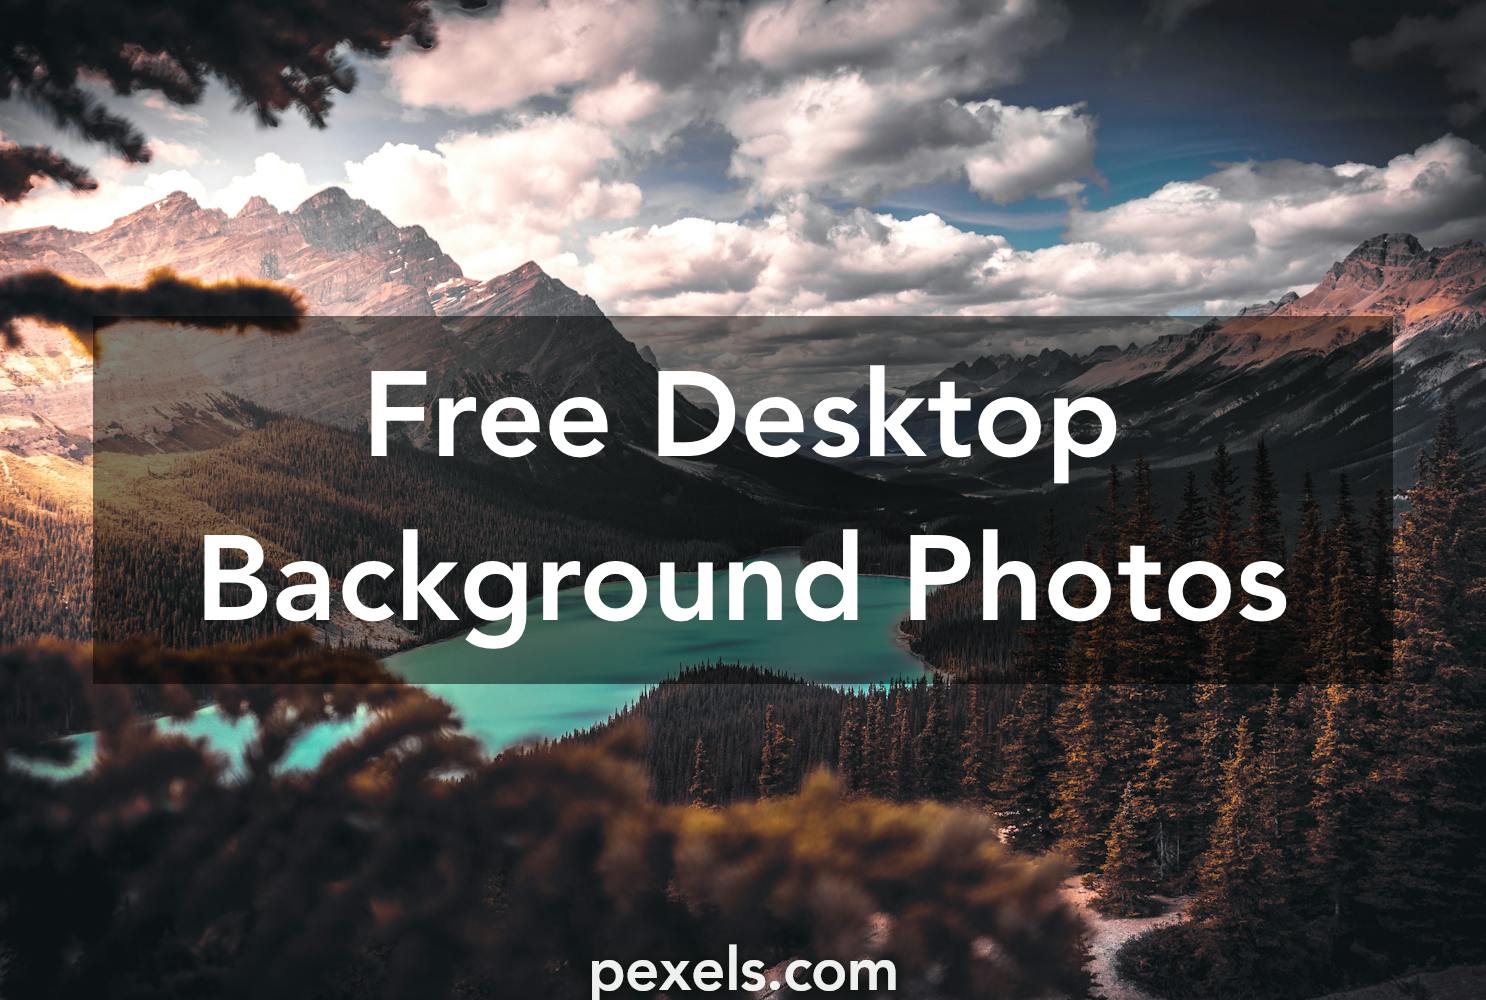 1000+ Amazing Desktop Background Photos Pexels · Free Stock Photos